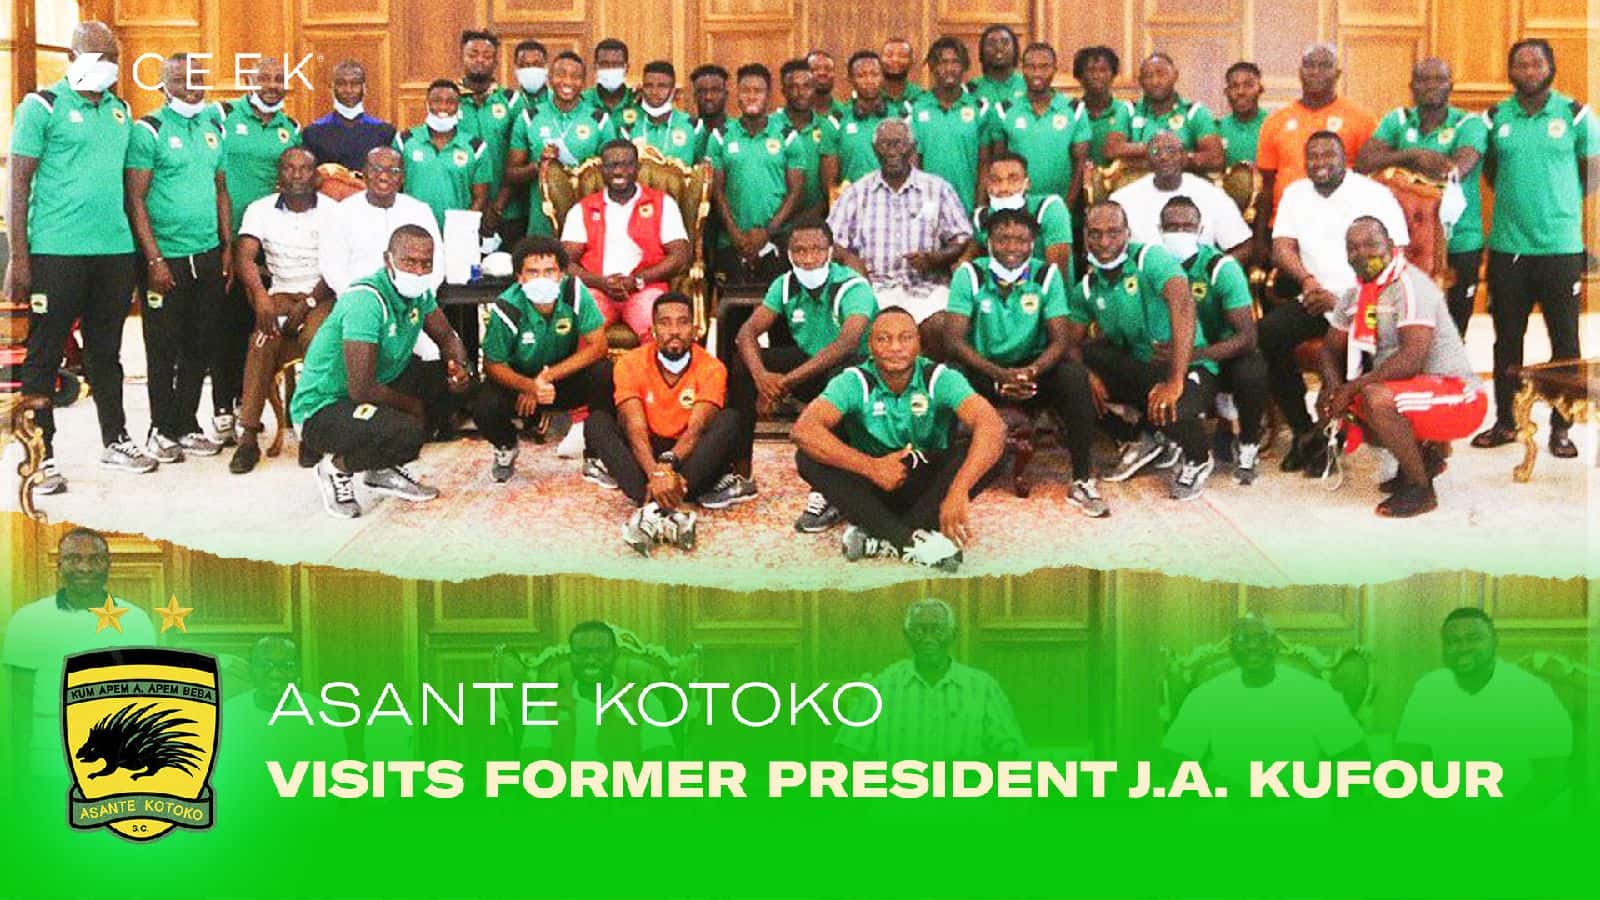 Asante Kotoko Asante Kotoko visits former President J.A. Kufour